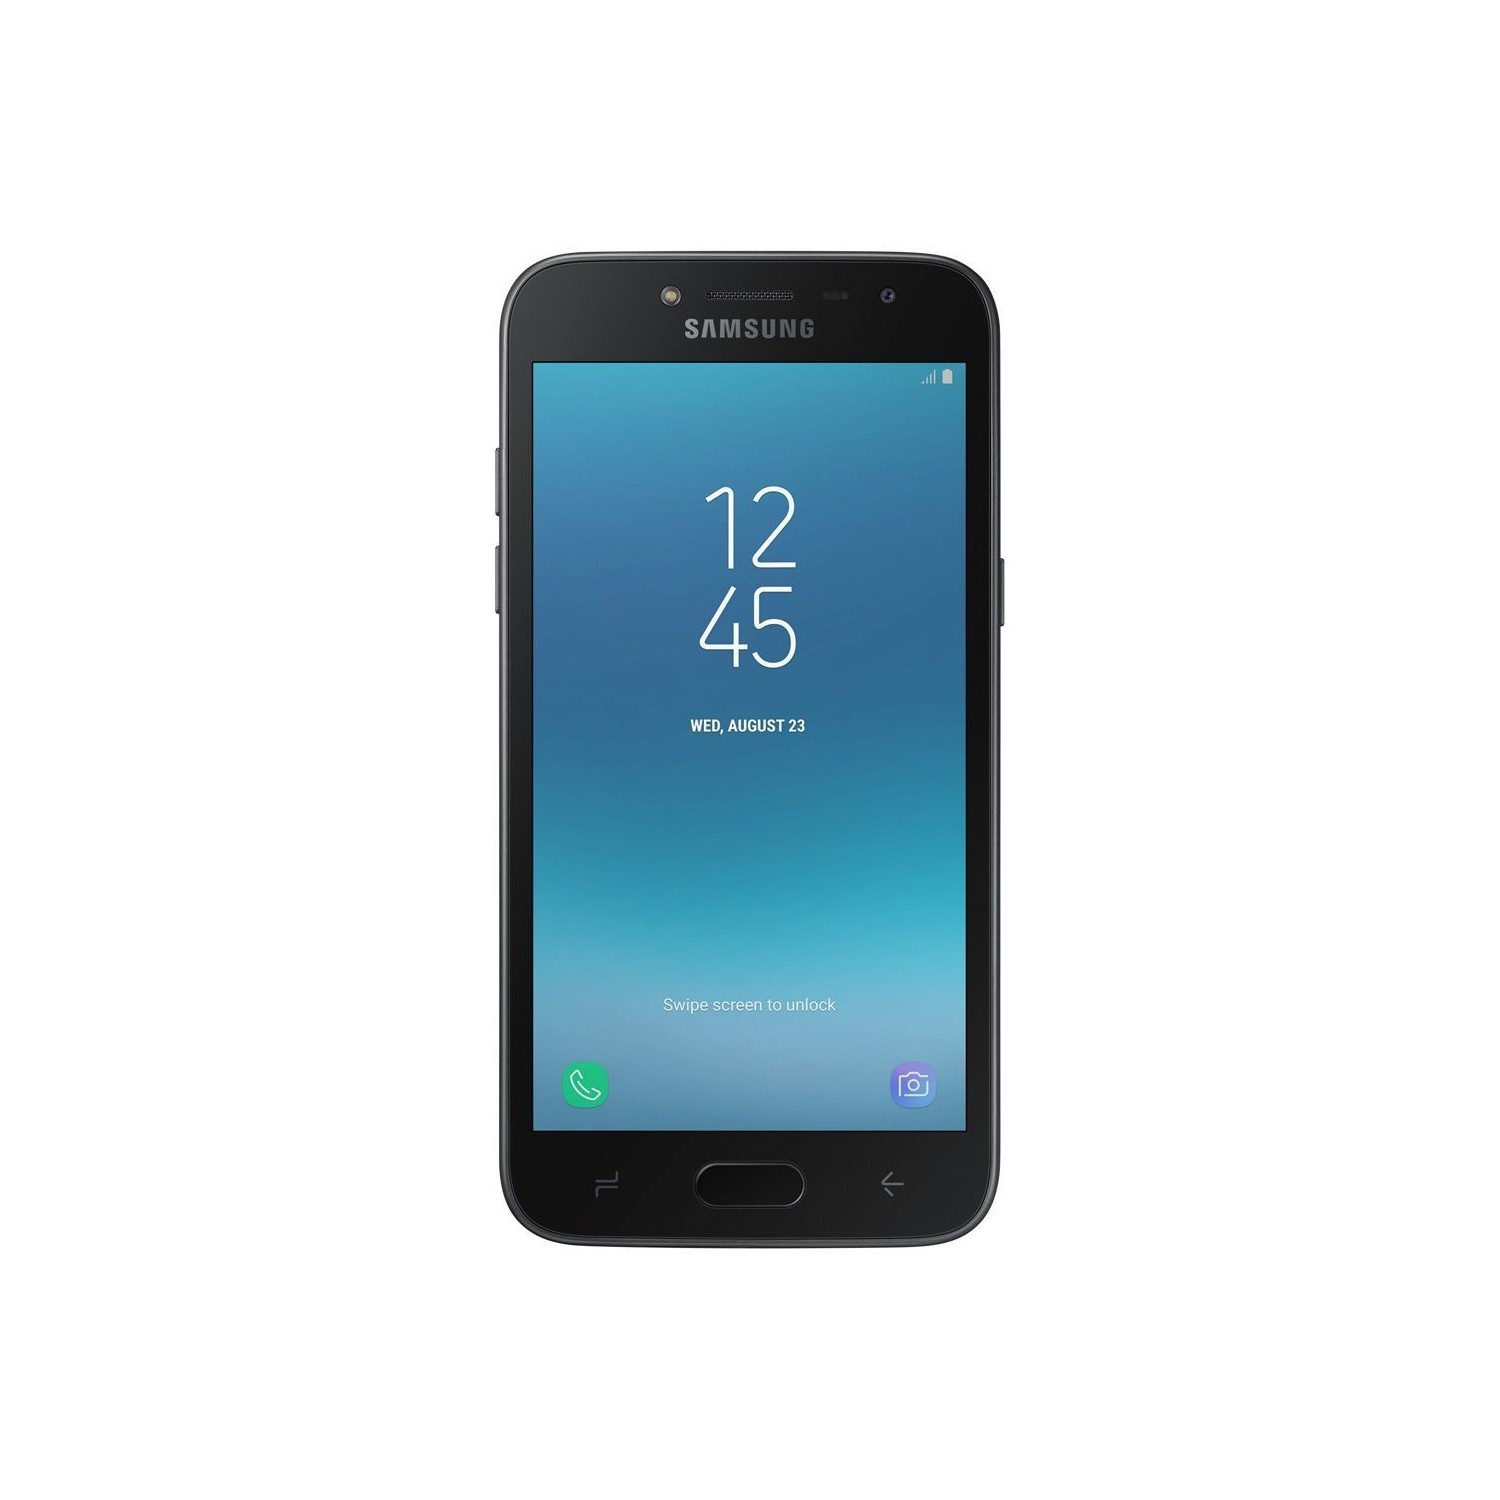 Samsung Galaxy J2 Pro - Dual SIM - 16GB Smartphone - Black - Unlocked (International Version w/Seller Provided Warranty)